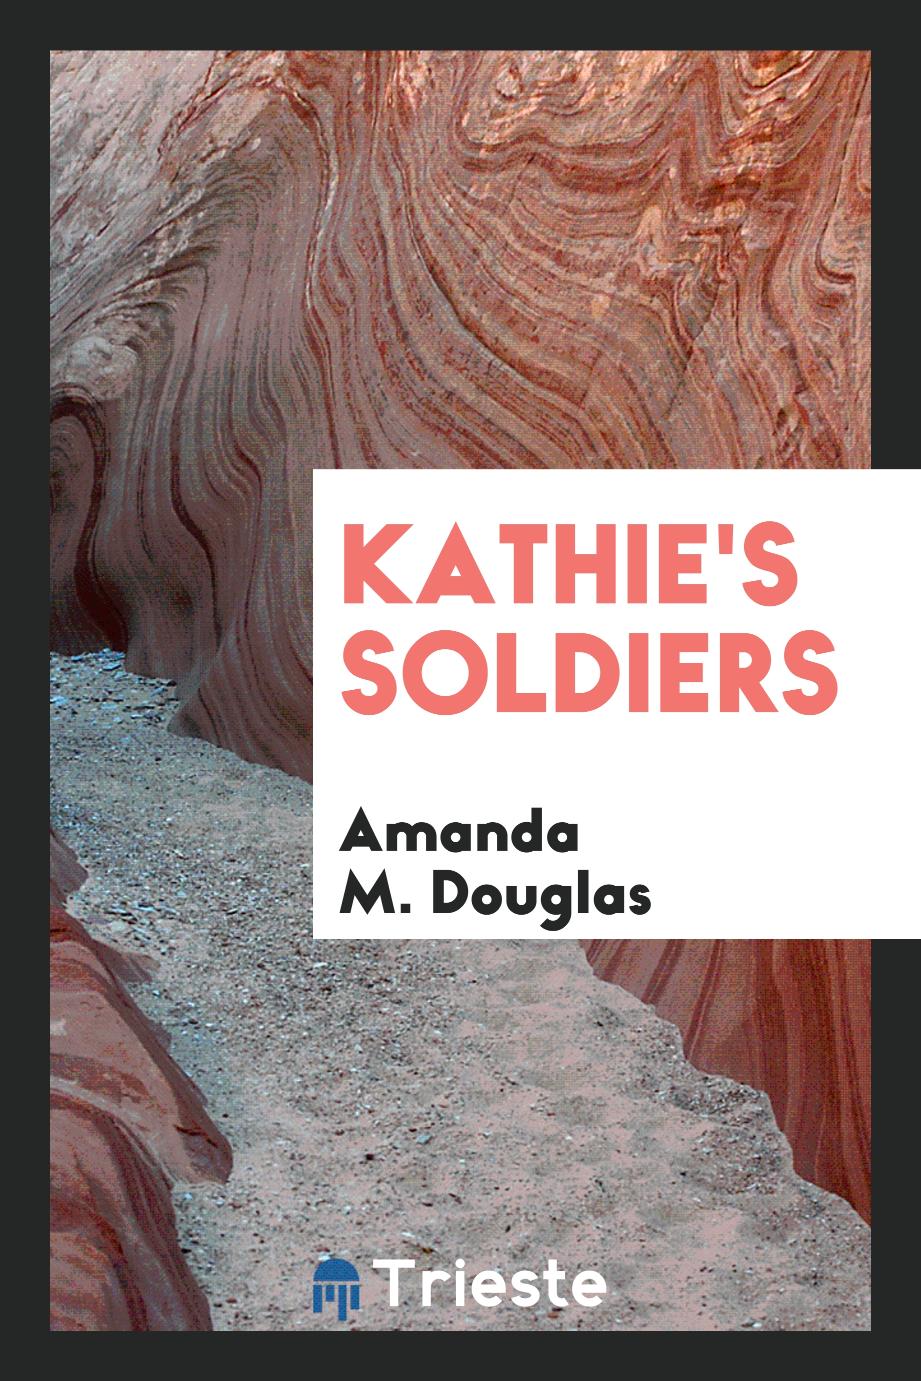 Kathie's soldiers